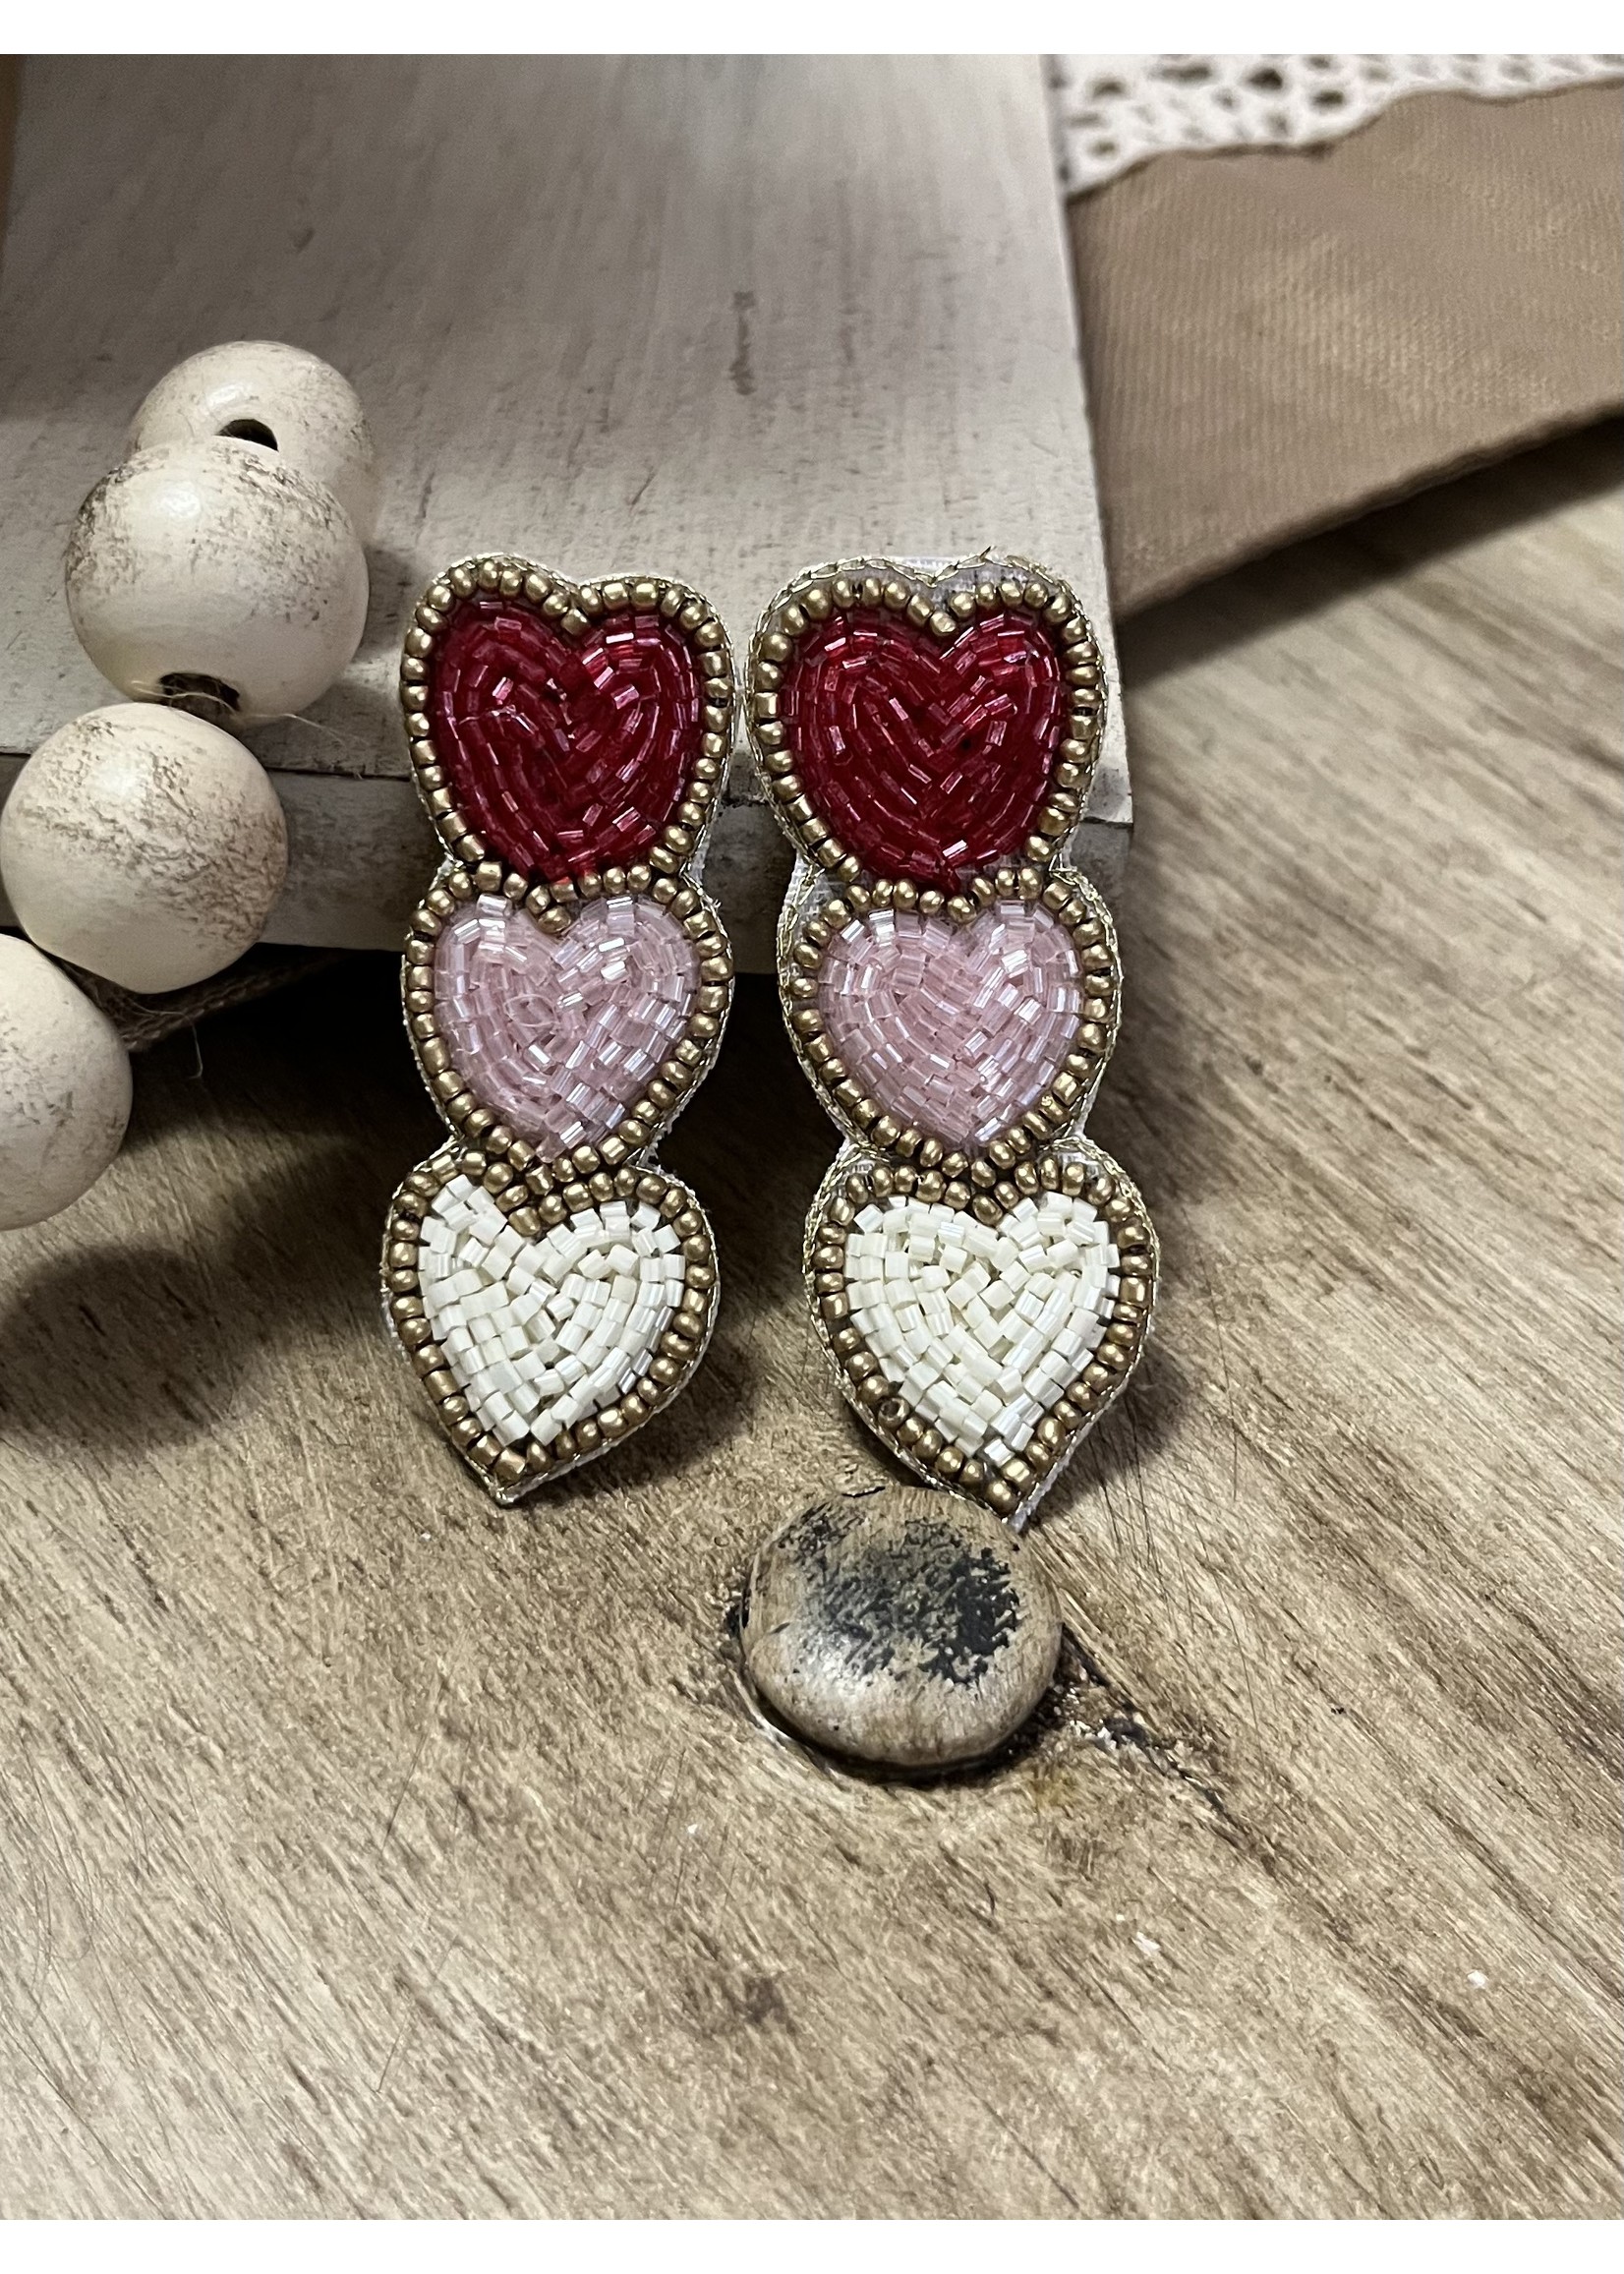 Triple Heart Bead Earring - Red/Pink/White